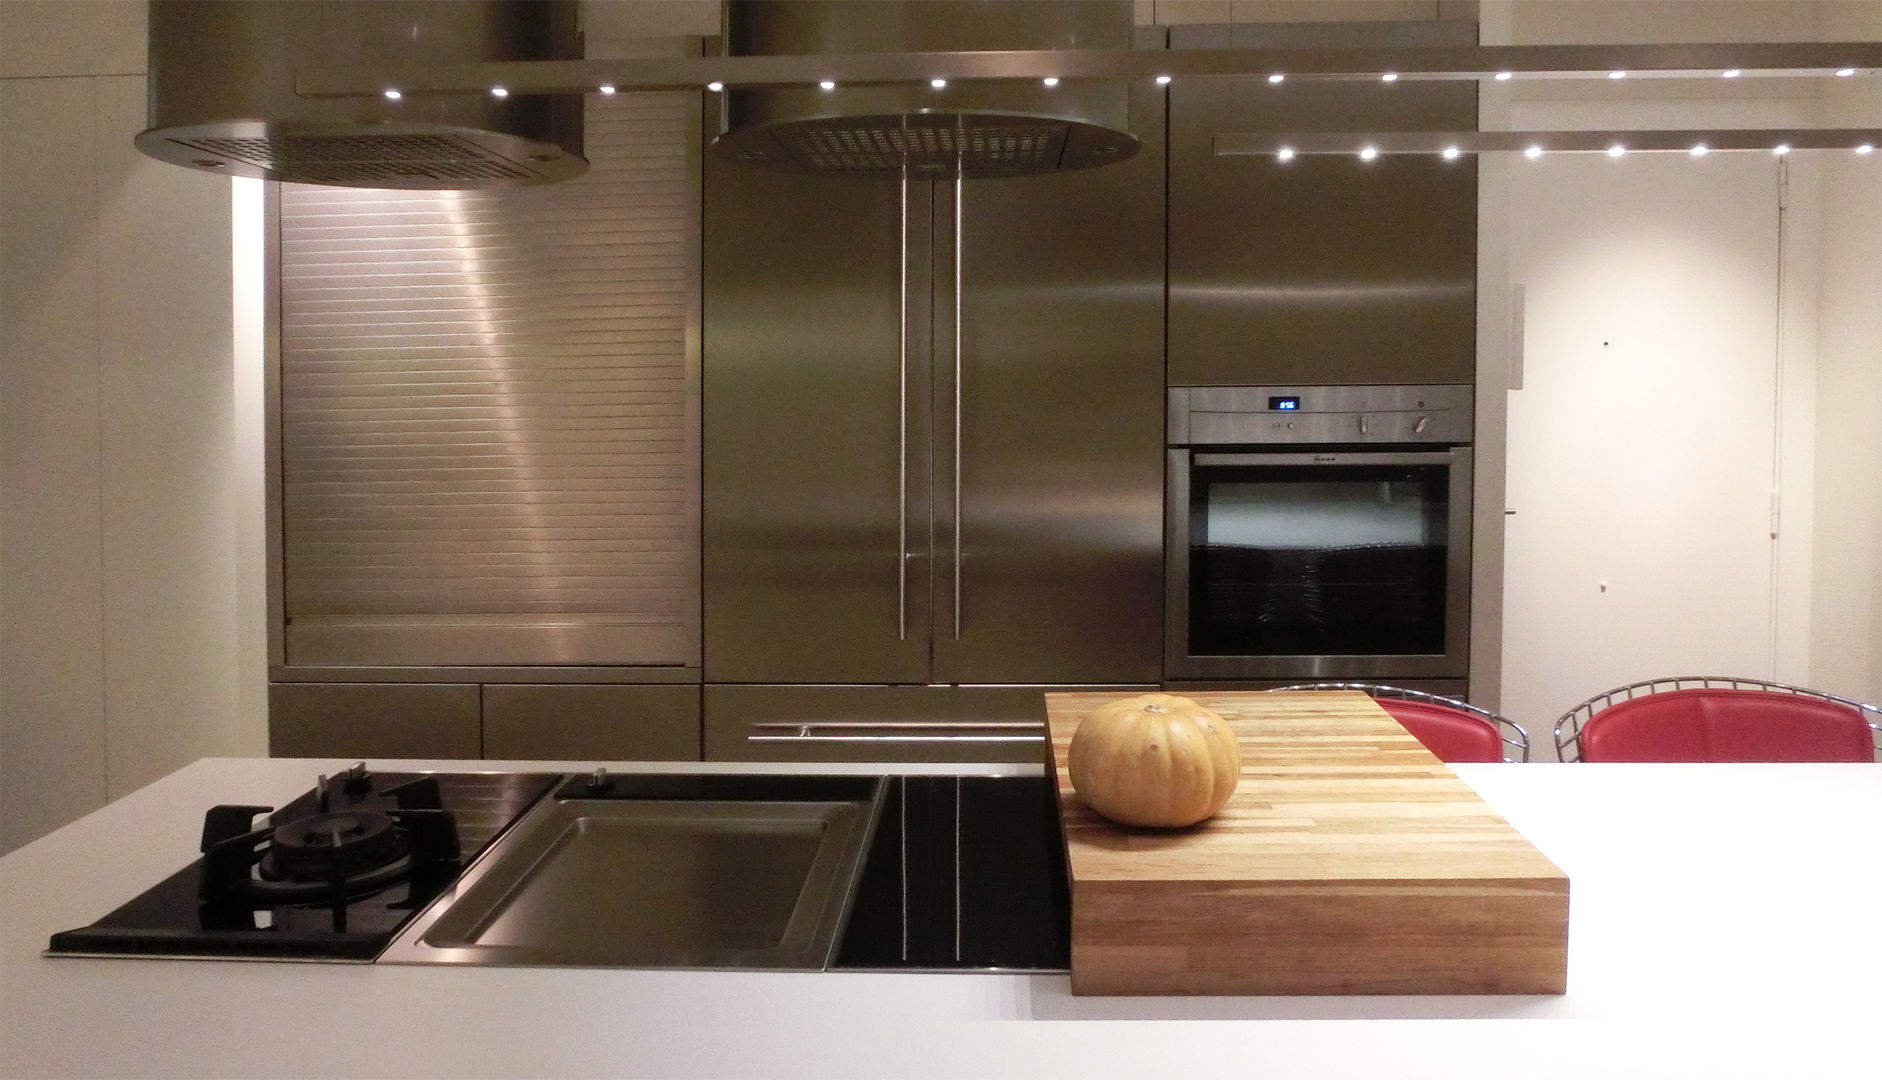 Detail of triple cooking unit. Daifuku Designs ห้องครัว kitchen cabinet,kitchen island